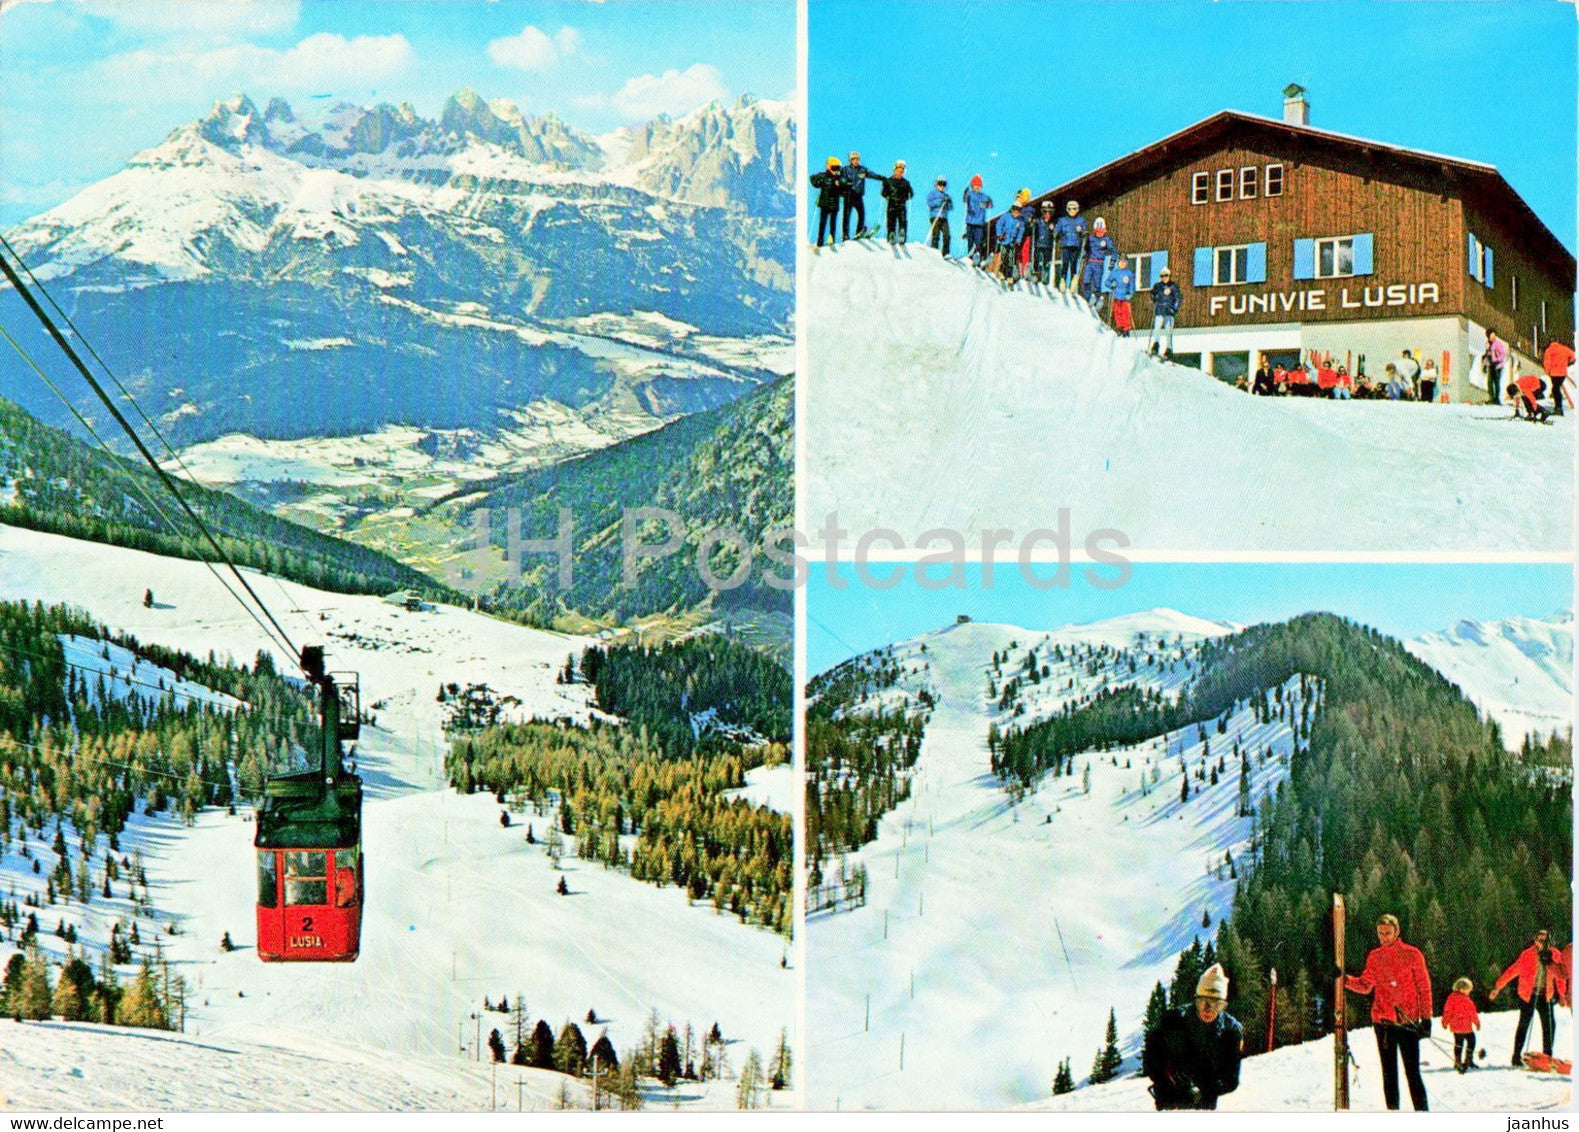 Moena - Dolomiti - Funivie del Lusia - vedute - cable car - 1972 - Italy - used - JH Postcards